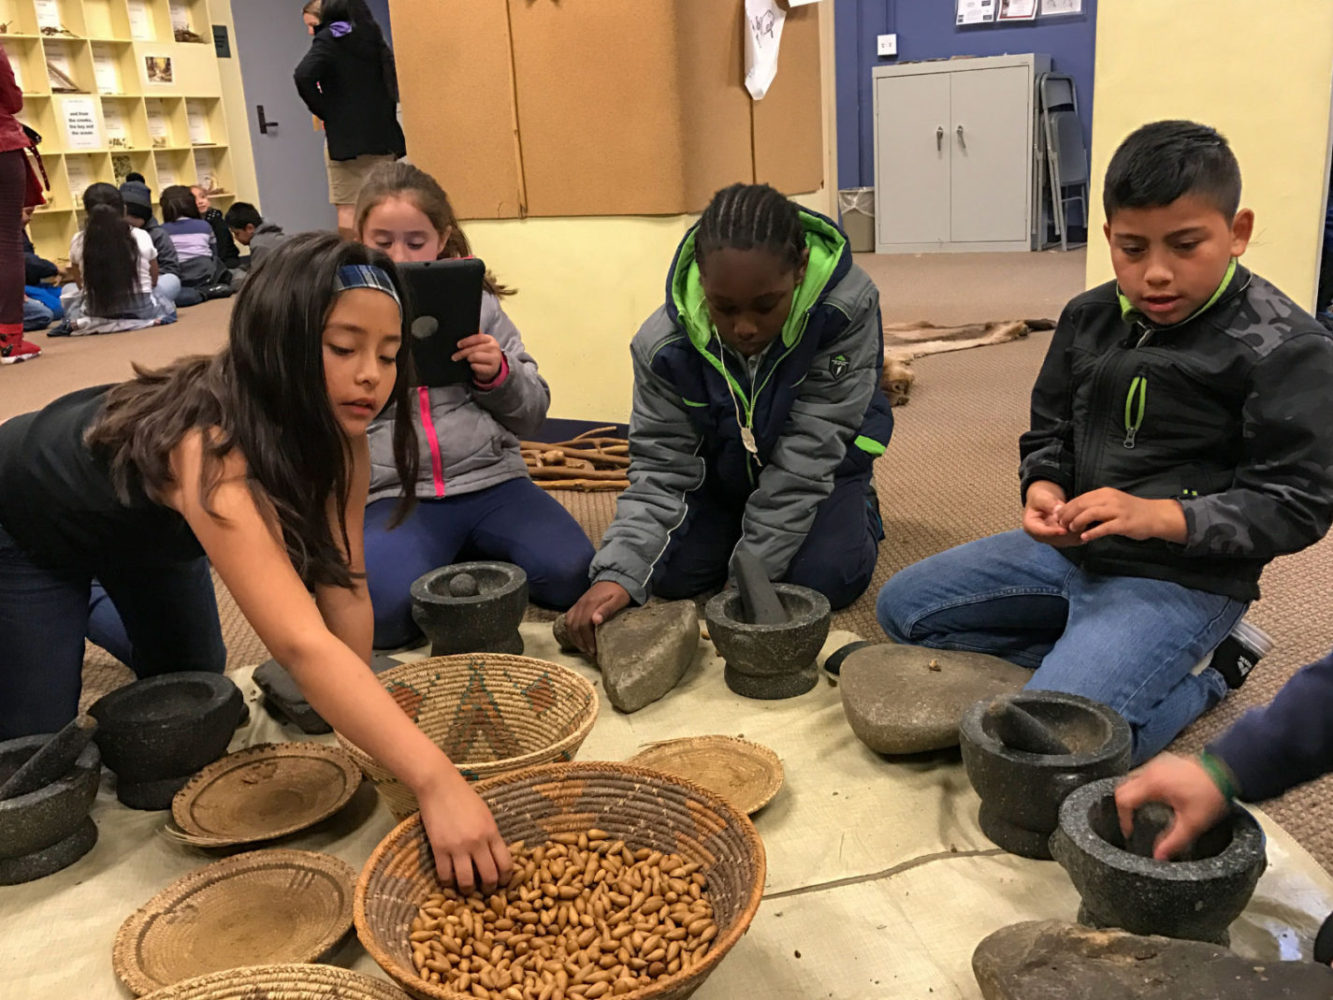 Students use a mortar to ground acorns at Providing Plenty school program at the San Mateo County History Museum